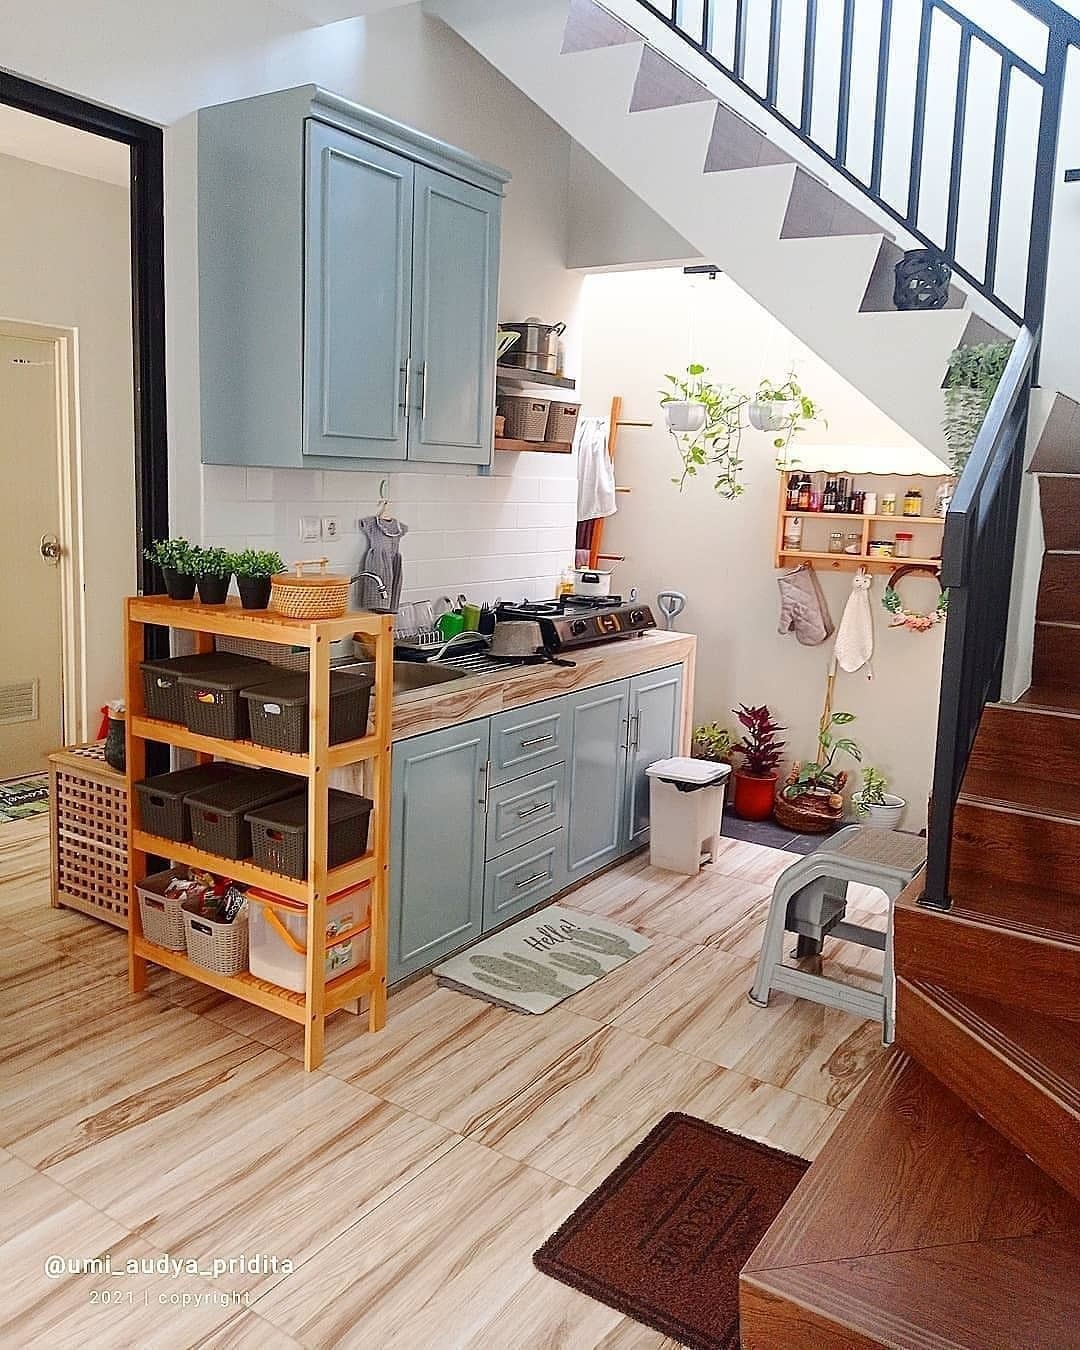 6 Desain Dapur Sederhana & Praktis Untuk Rumah Minimalis ~ HelloShabby